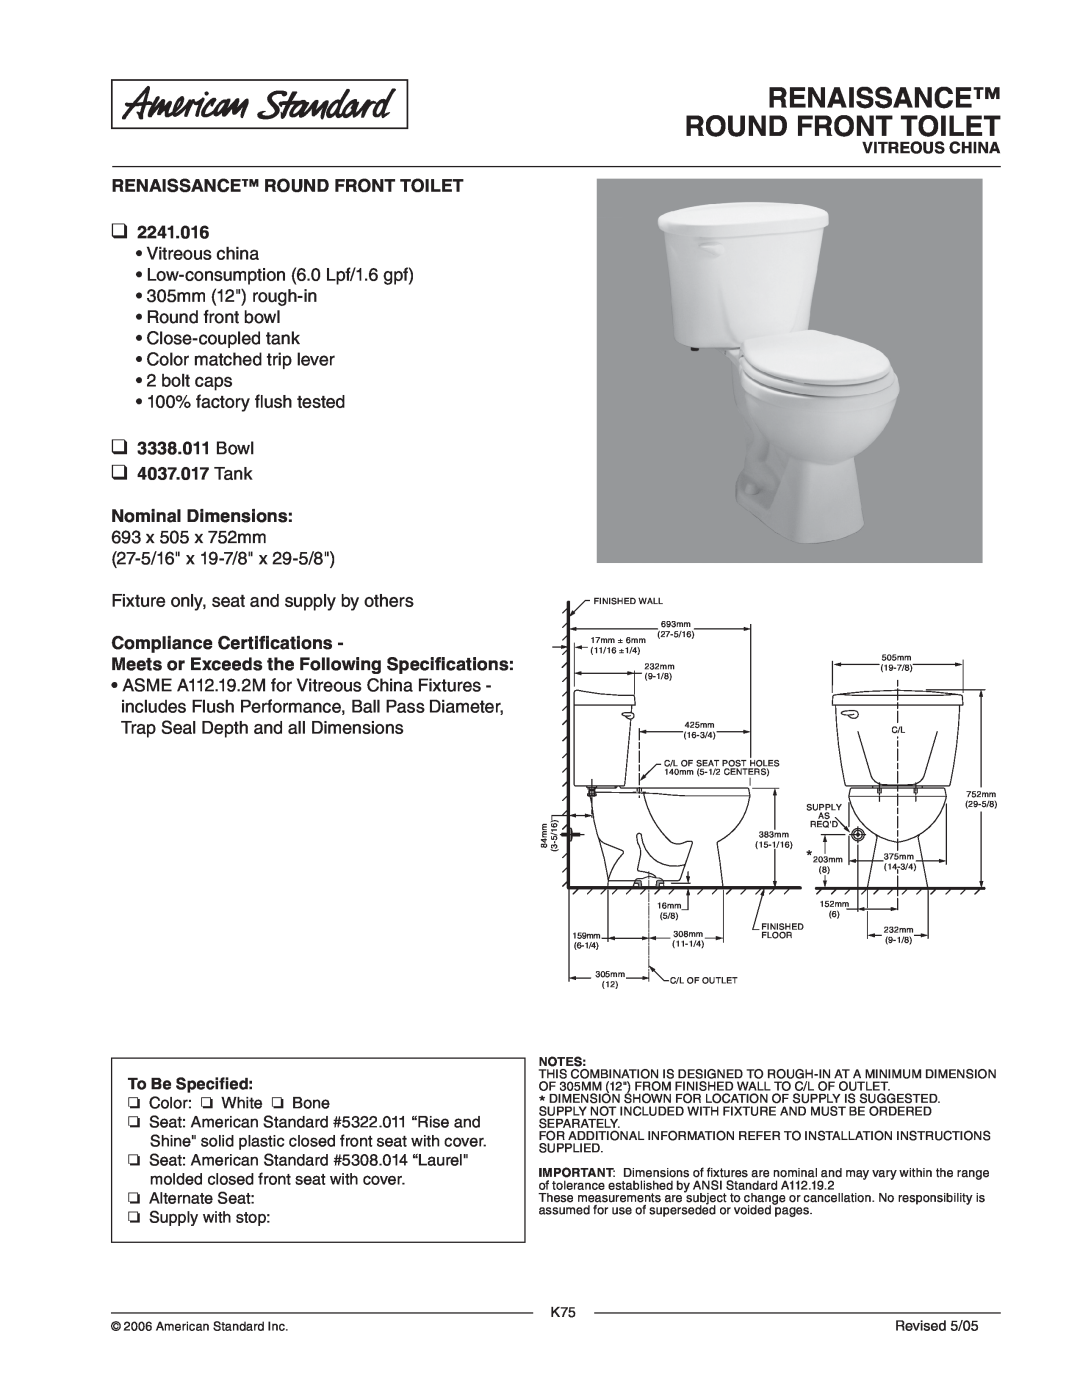 American Standard dimensions Renaissance Round Front Toilet, RENAISSANCE ROUND FRONT TOILET 2241.016, Vitreous China 